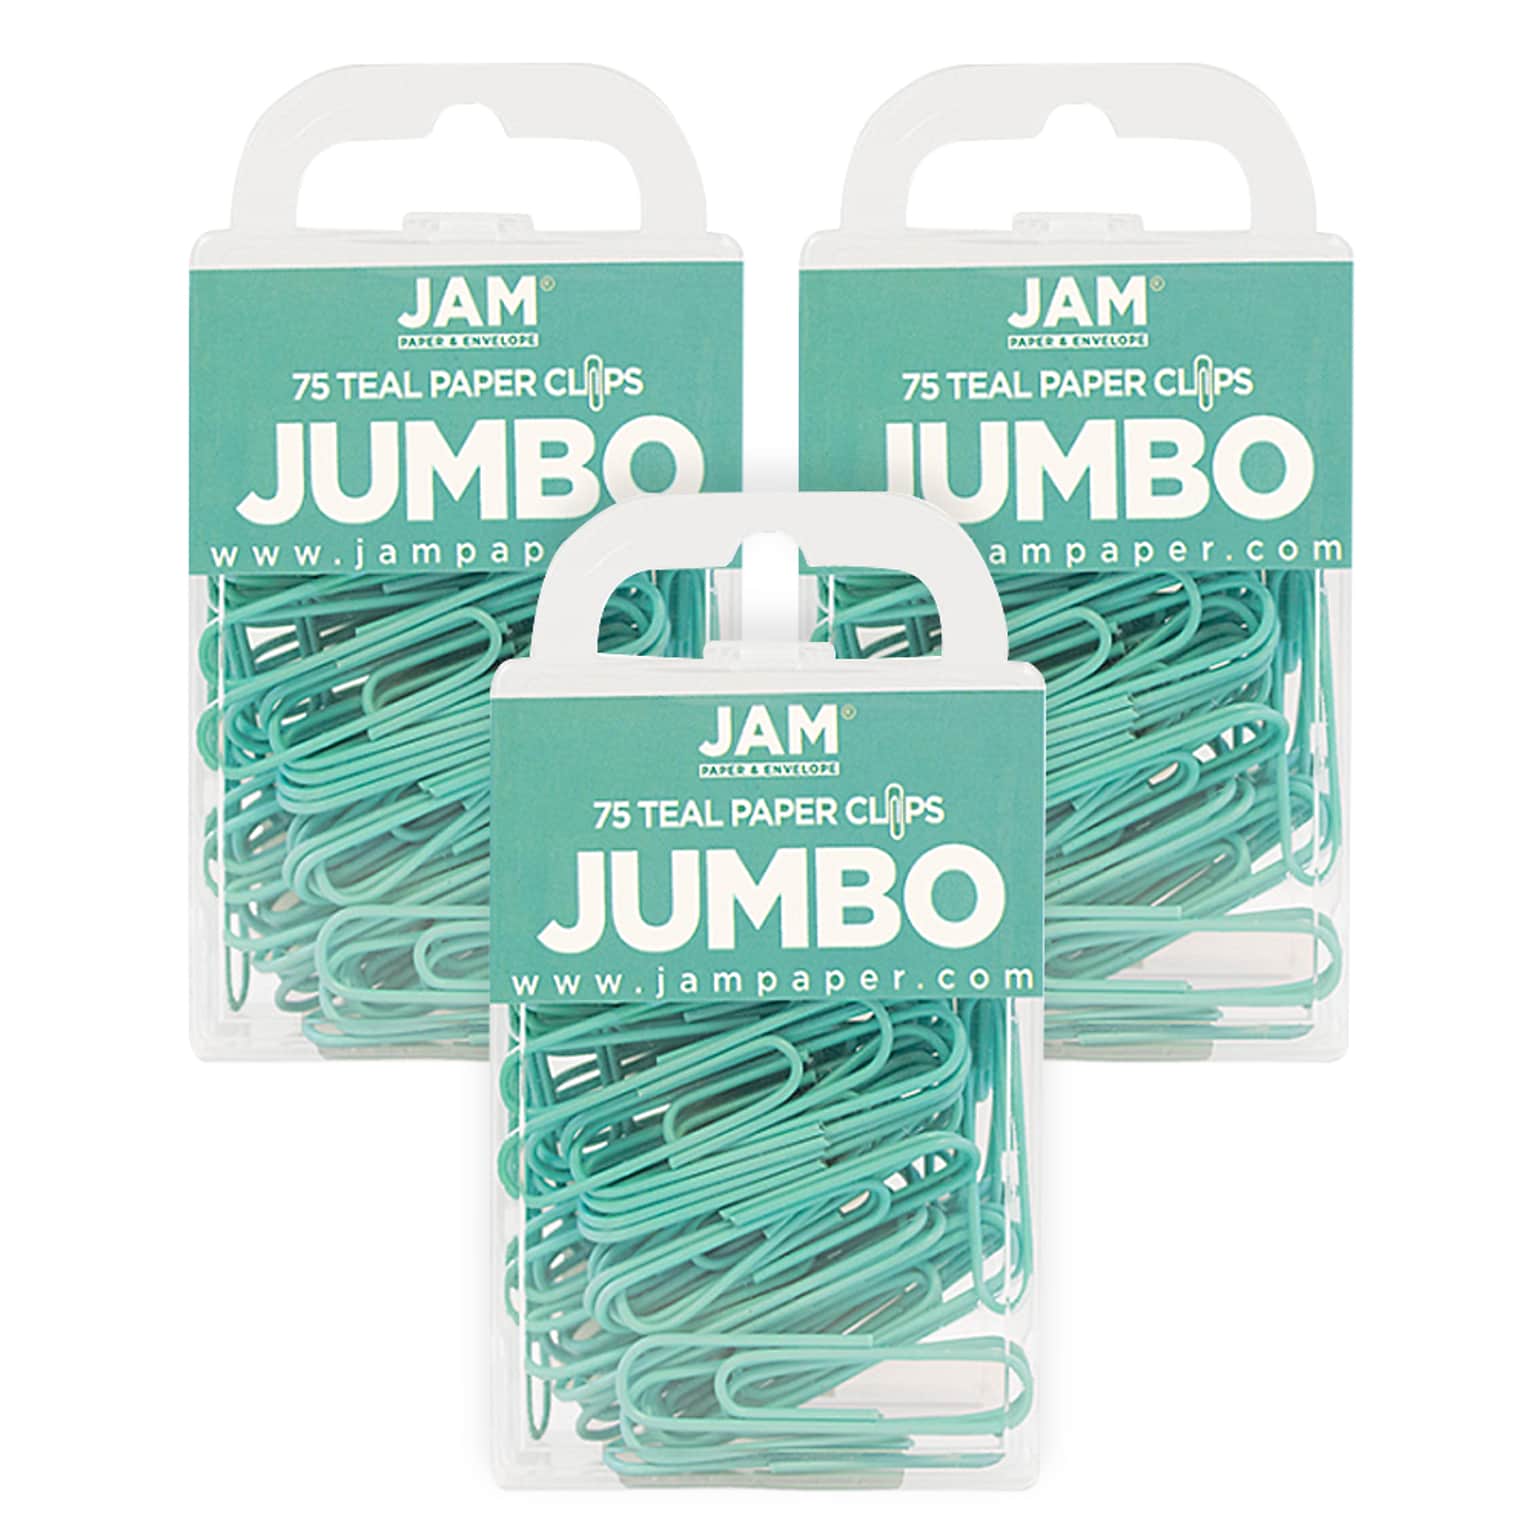 JAM Paper Jumbo Paper Clips, Teal, 3 Packs of 75 (21832065B)